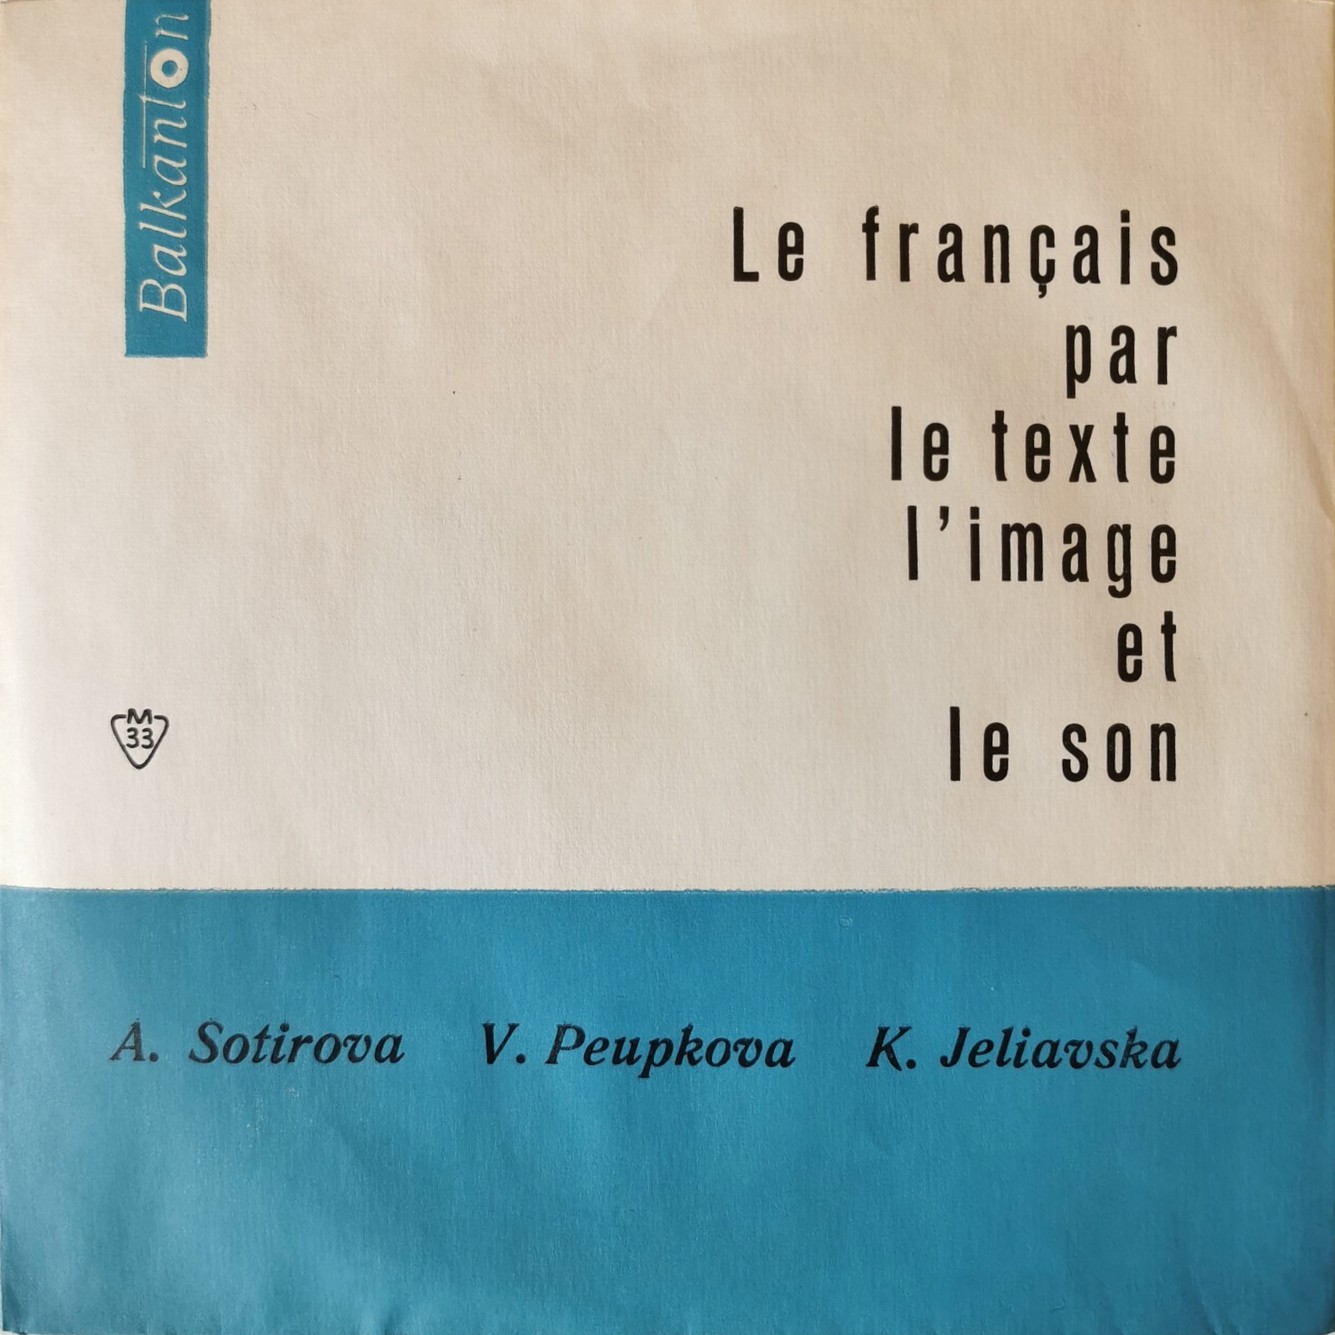 Le Fransais par le texte, l'image et le son (A. Sotirova, V. Peupkova, K. Jeliavska)